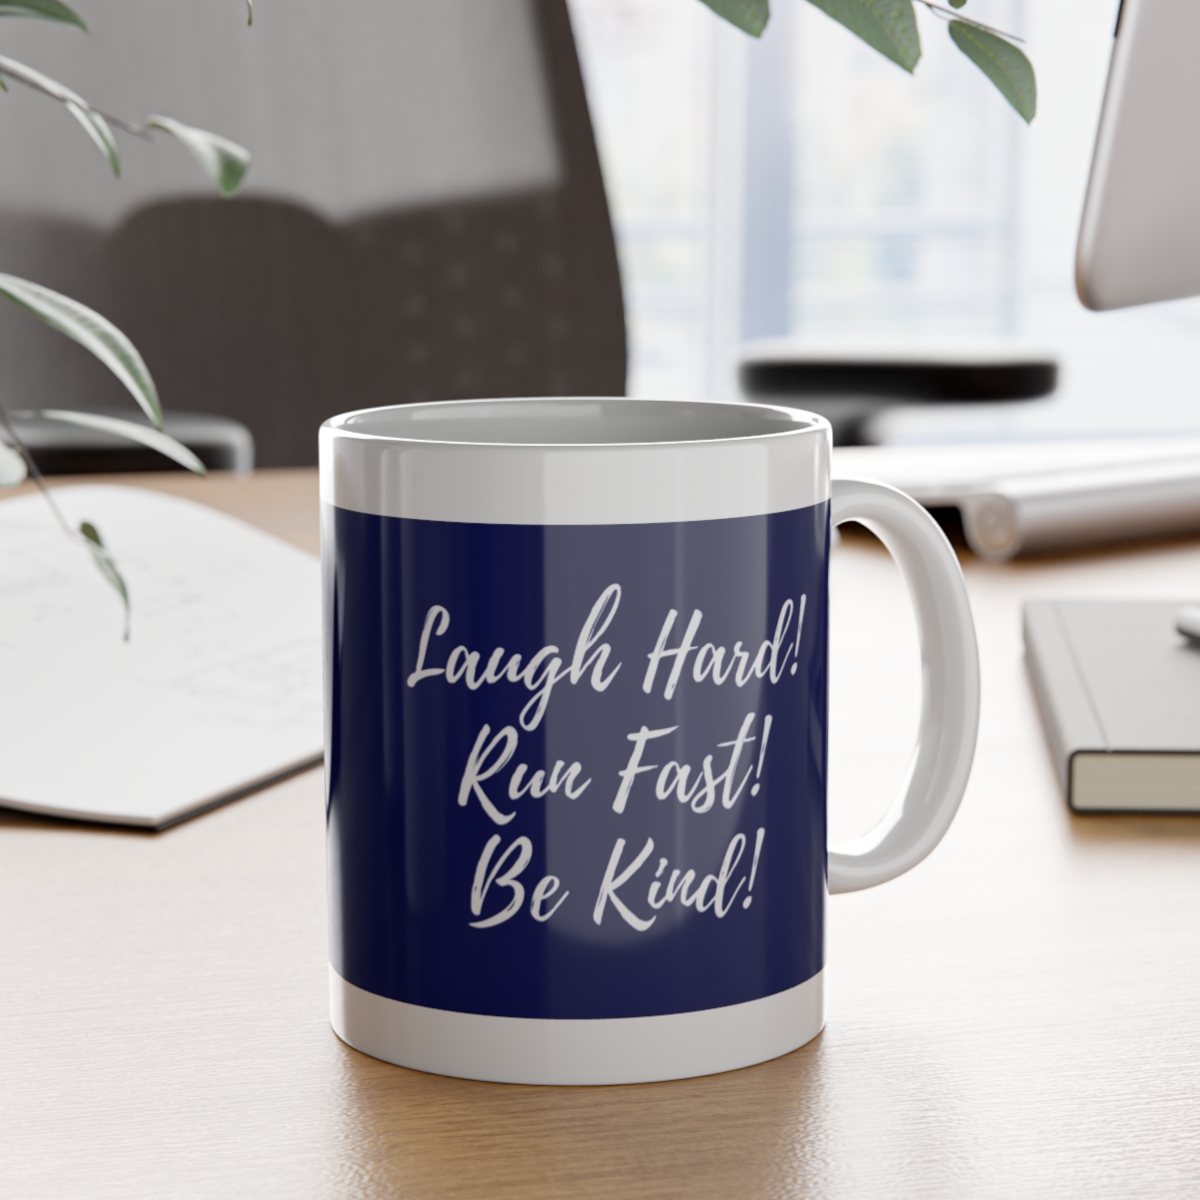 Laugh Hard! Run Fast! Be Kind! Doctor Who Mug product thumbnail image